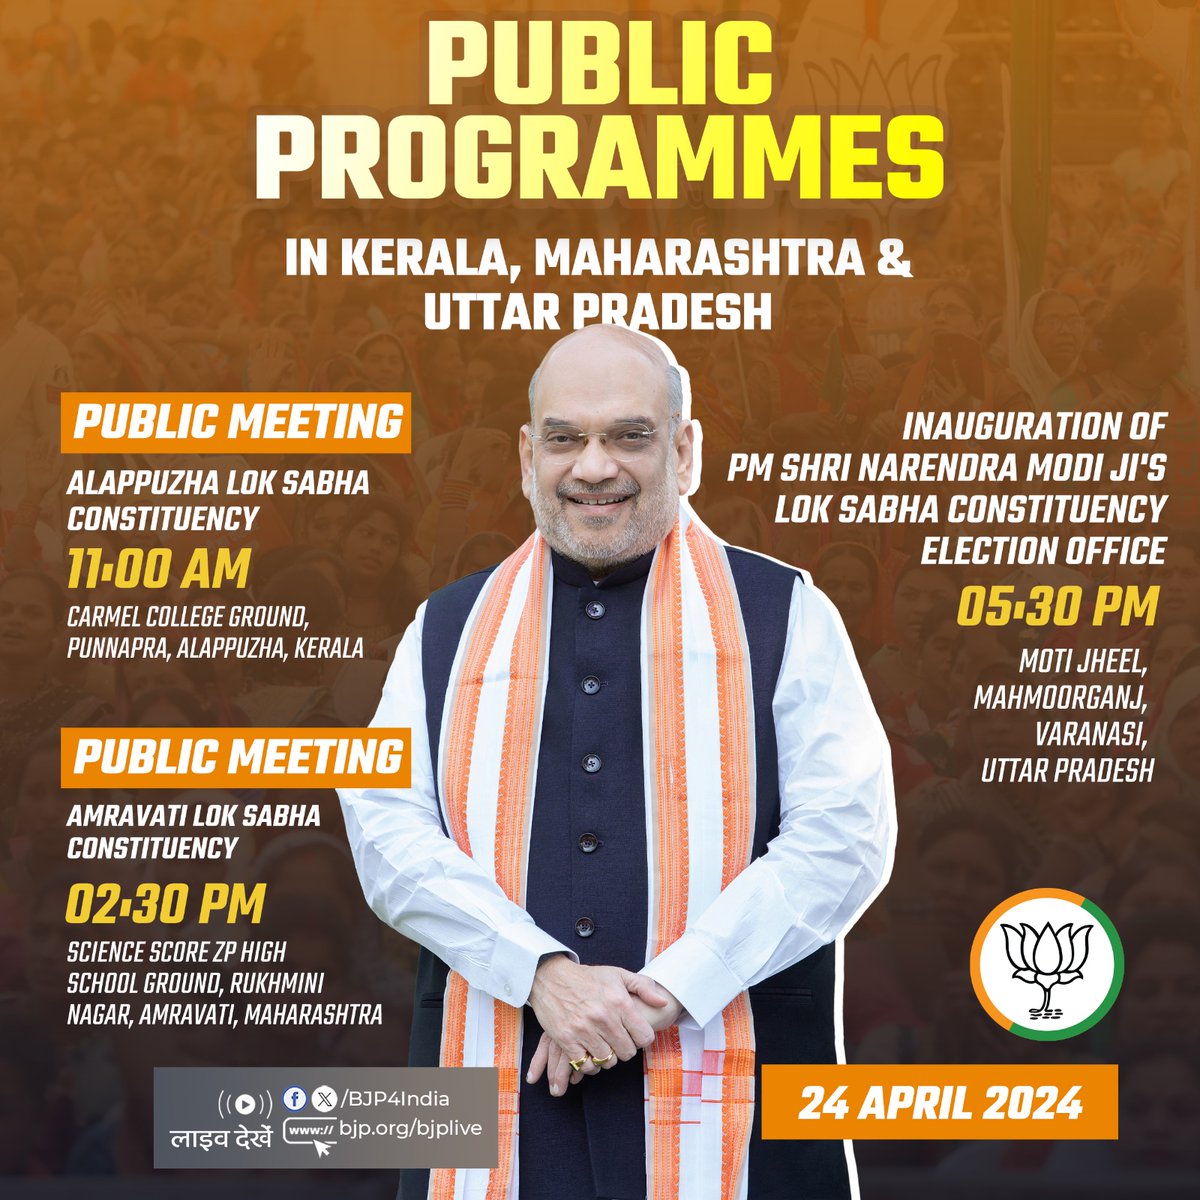 Union Home and Cooperation Minister Shri @AmitShah's public programmes in Kerala, Maharashtra and Uttar Pradesh on 24 April 2024. Watch live: 📺twitter.com/BJP4India 📺facebook.com/BJP4India 📺youtube.com/BJP4India 📺bjp.org/bjplive